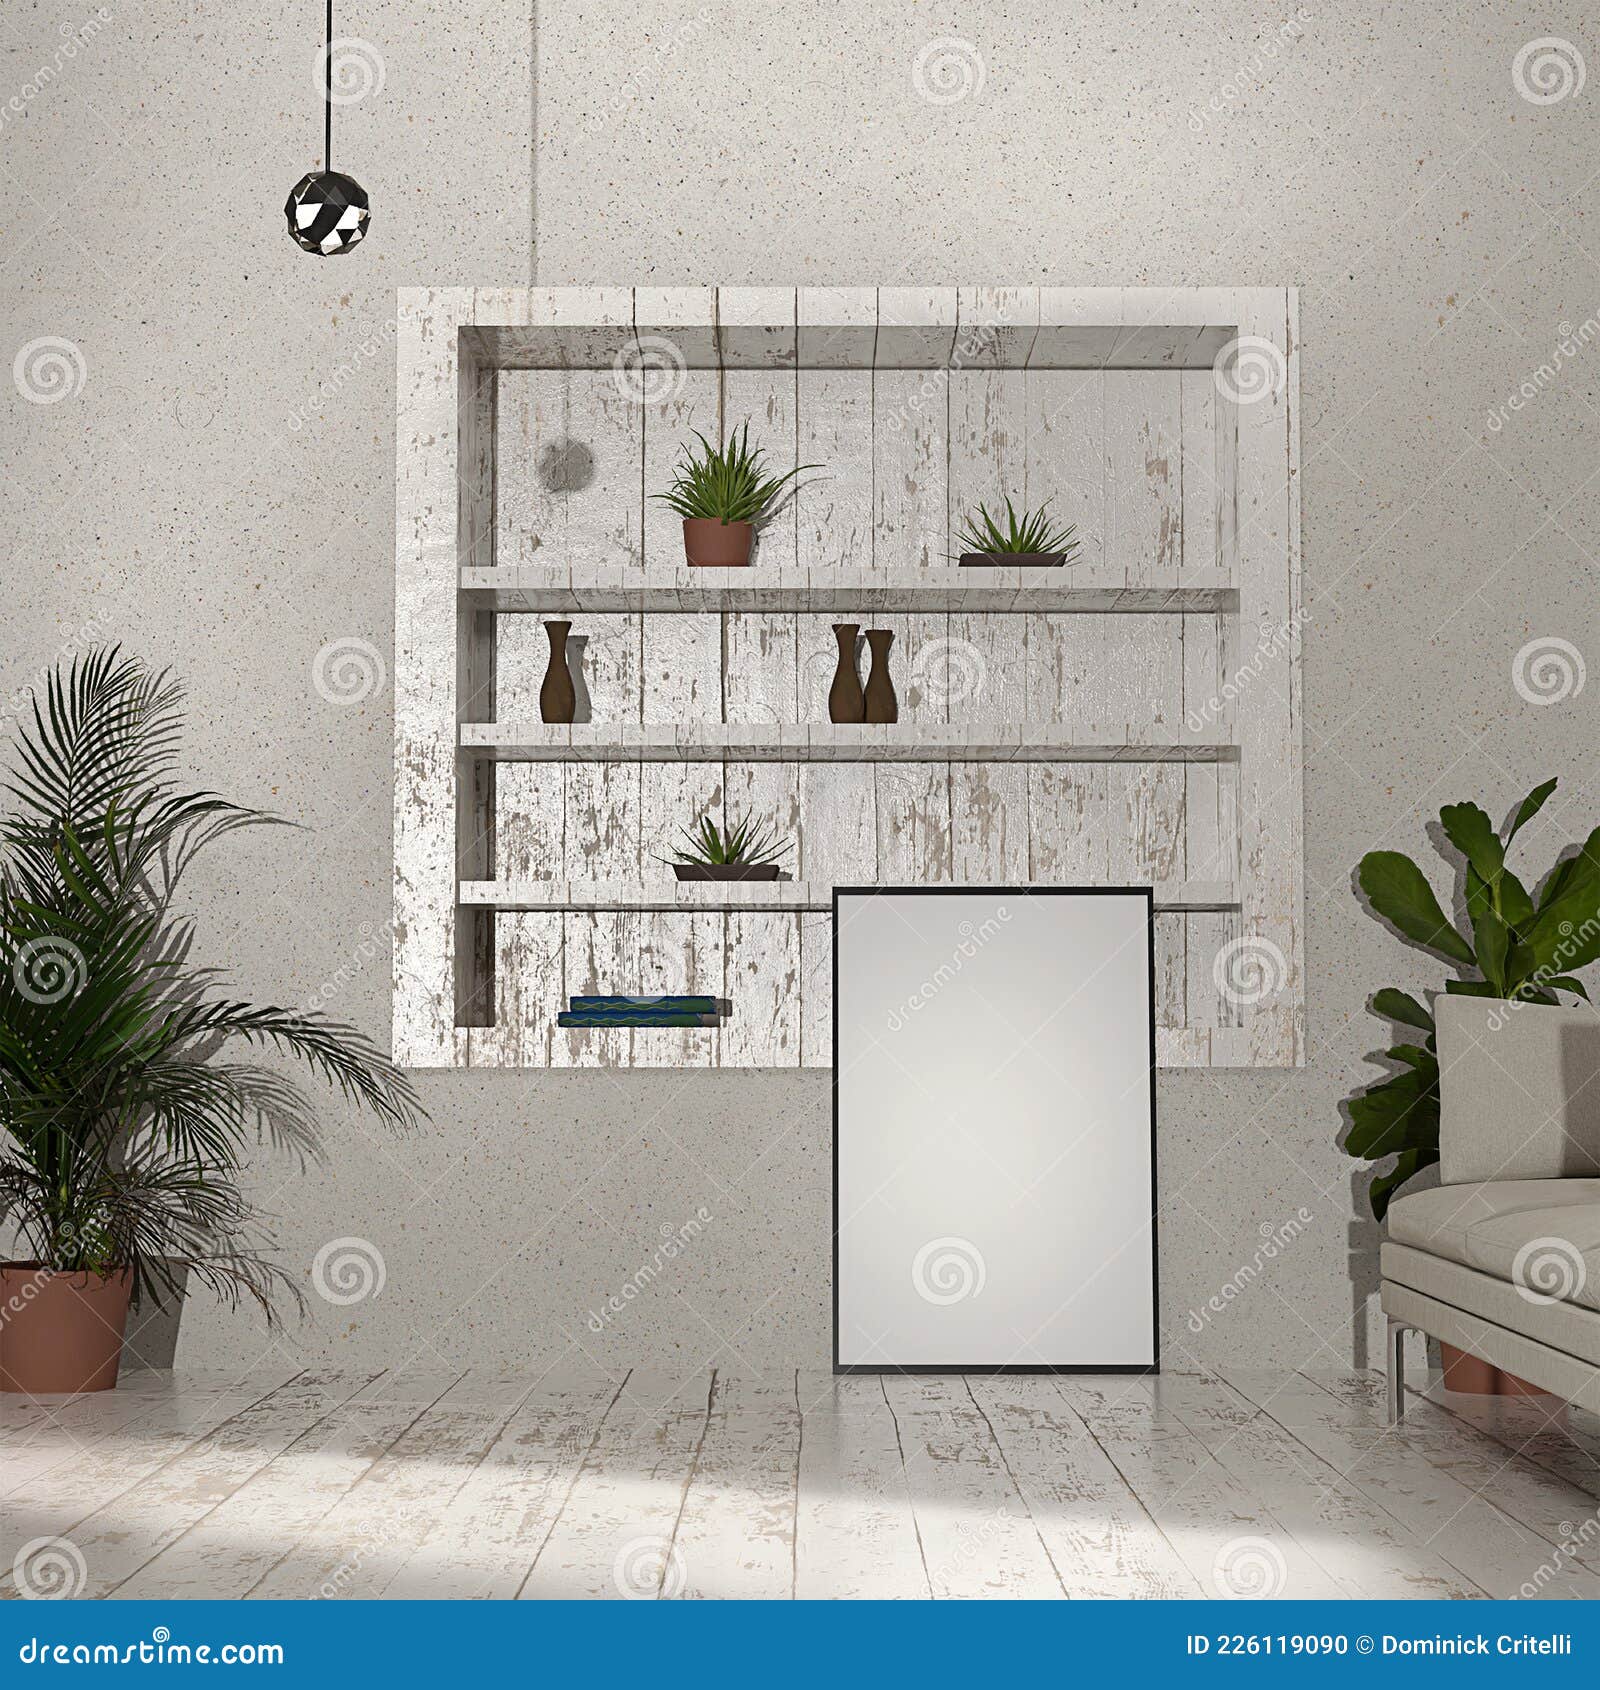 poster frame mocked up in modern interior background, book shelf nook, minimalistic style, 3d render, 3d 